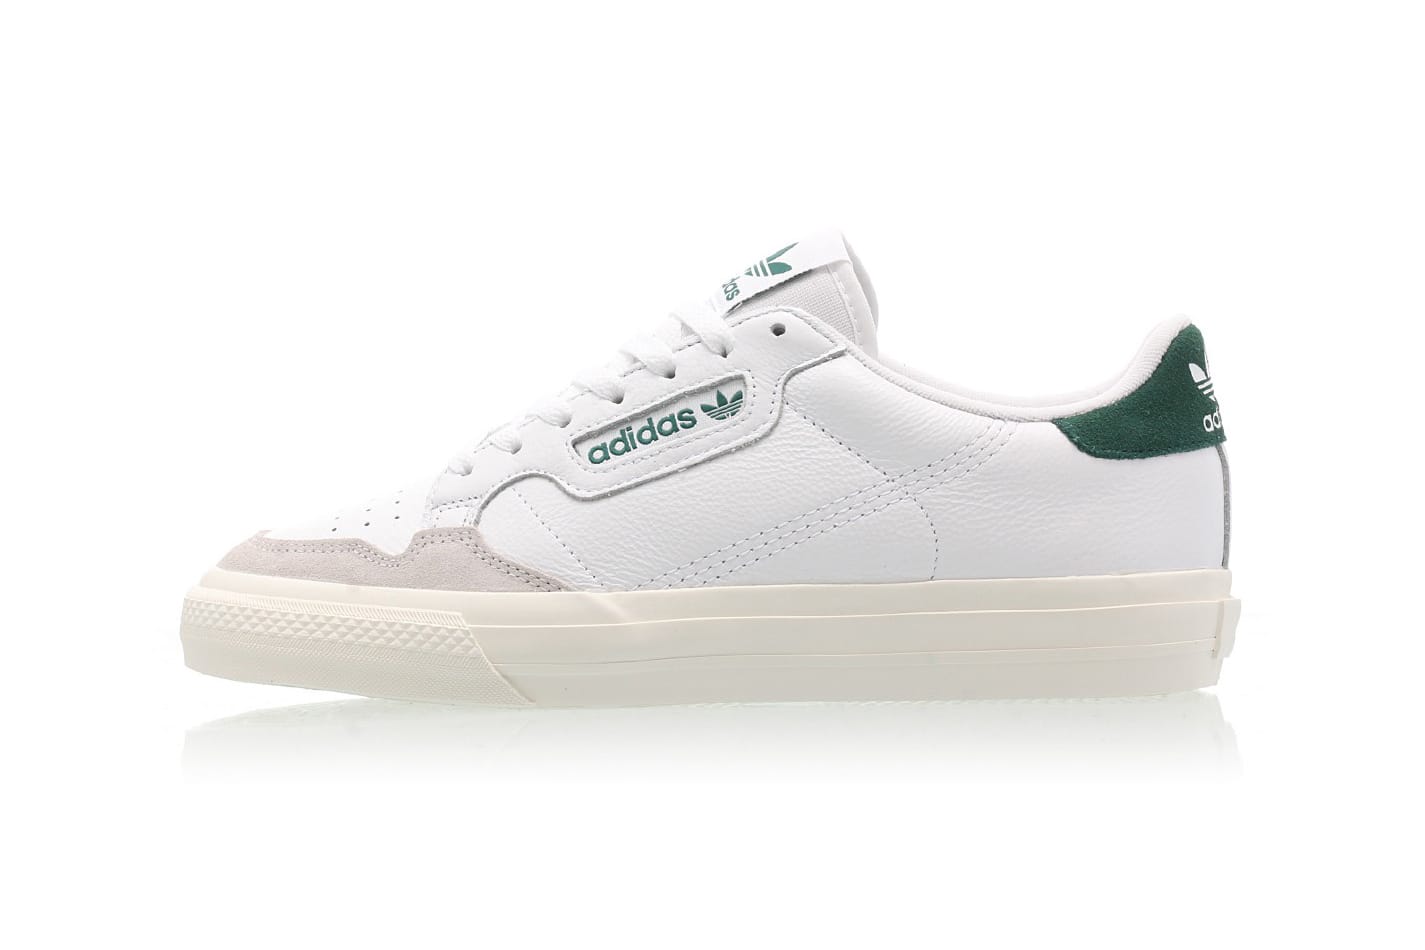 adidas white shoes green logo